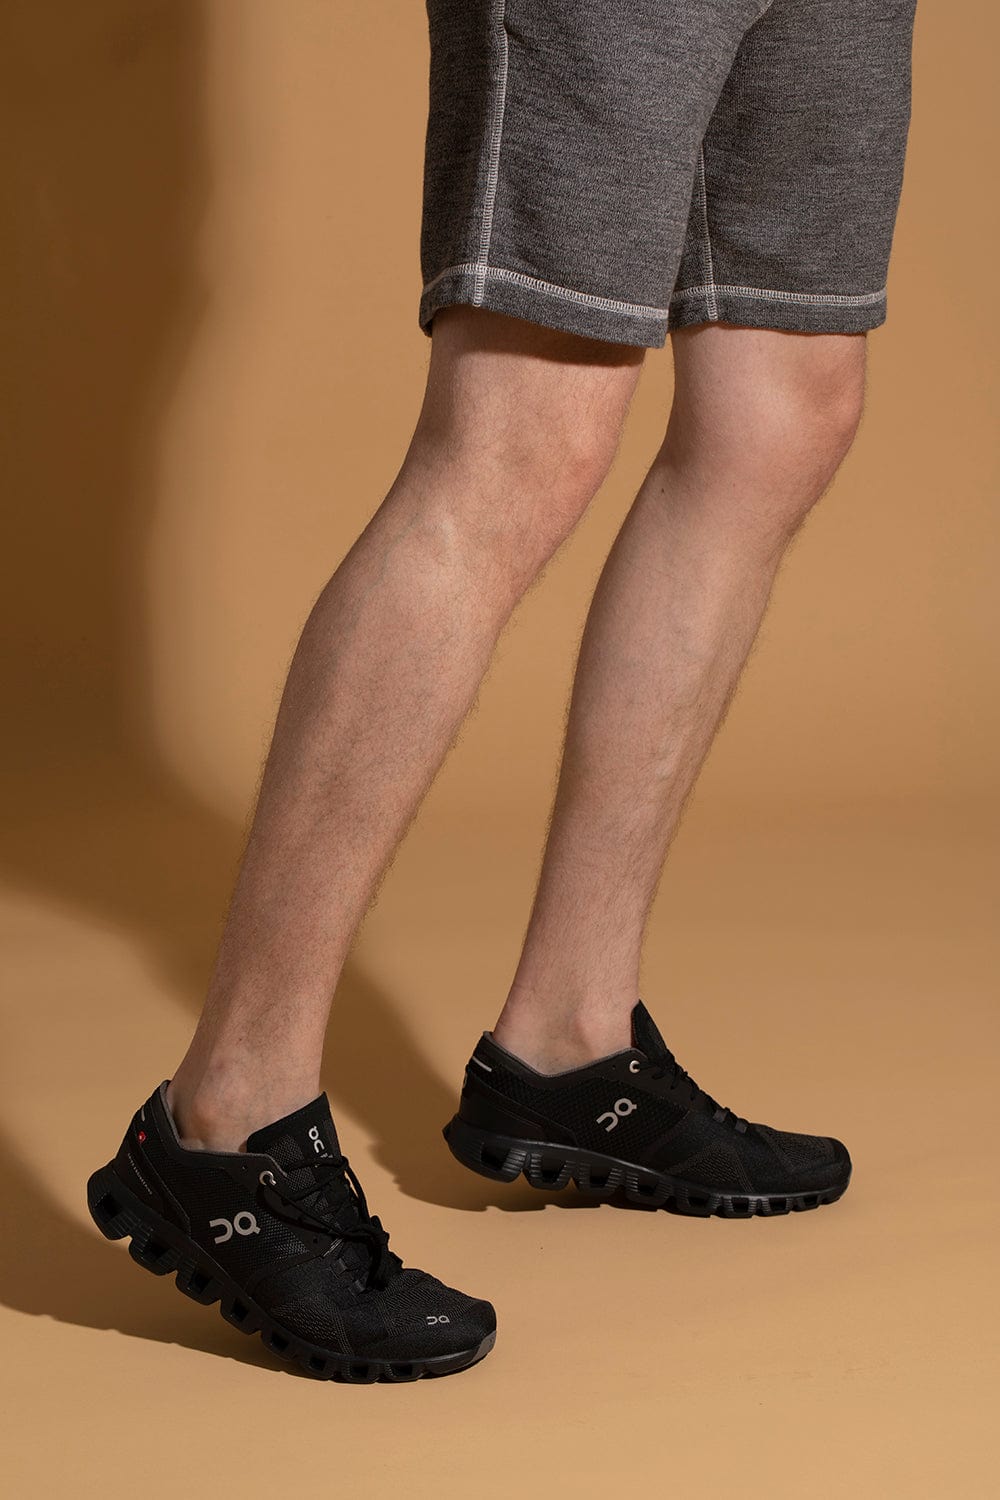 Men's Cloud X Running Shoe - Black/Asphalt